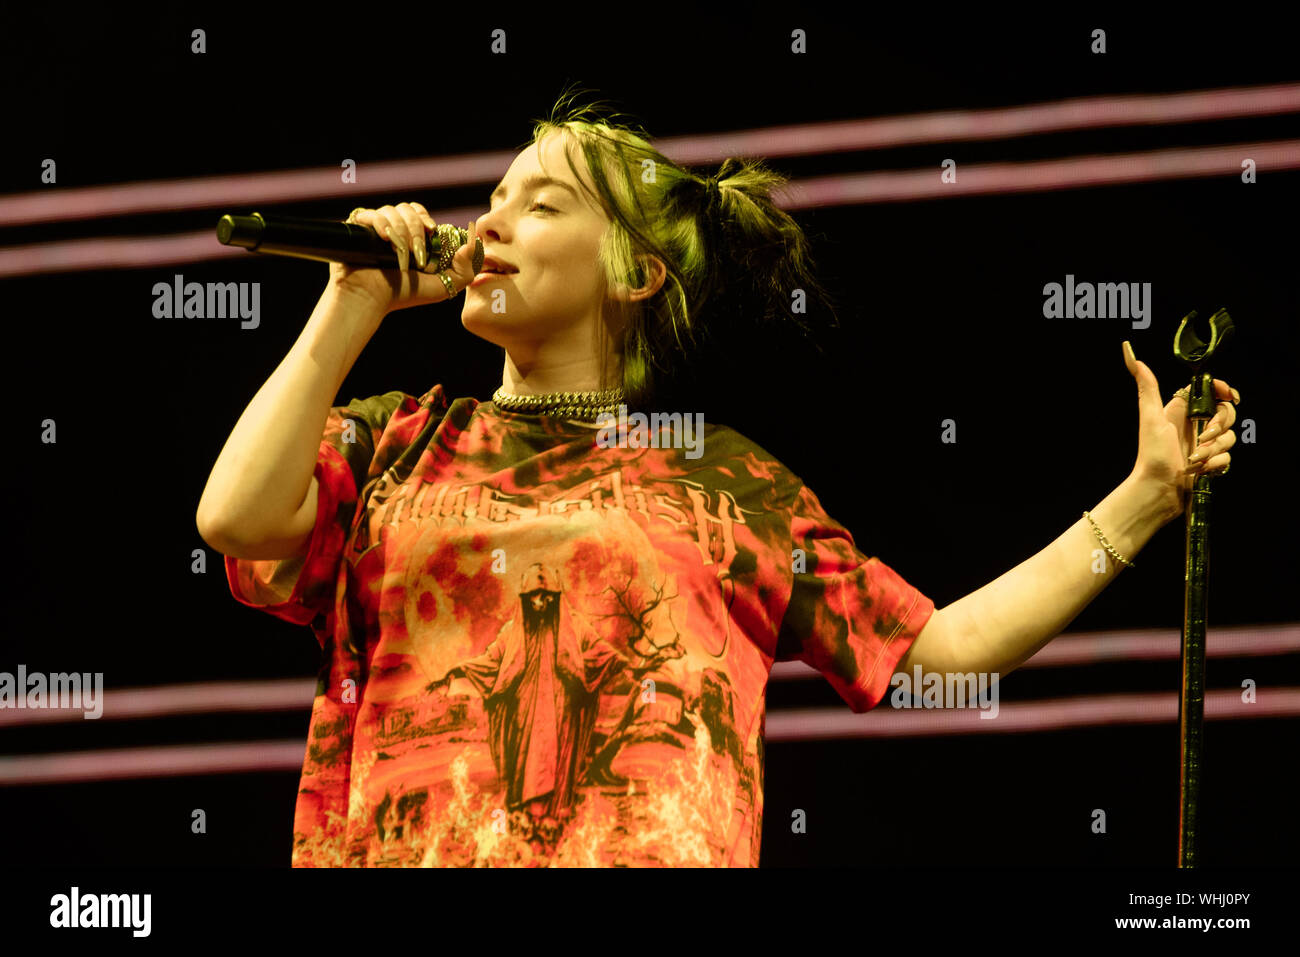 Barcelona, Spain. 2nd Sep, 2019. Billie Eilish performs in concert at Palau Sant Jordi in Barcelona, Spain. Credit: Christian Bertrand/Alamy Live News. Stock Photo